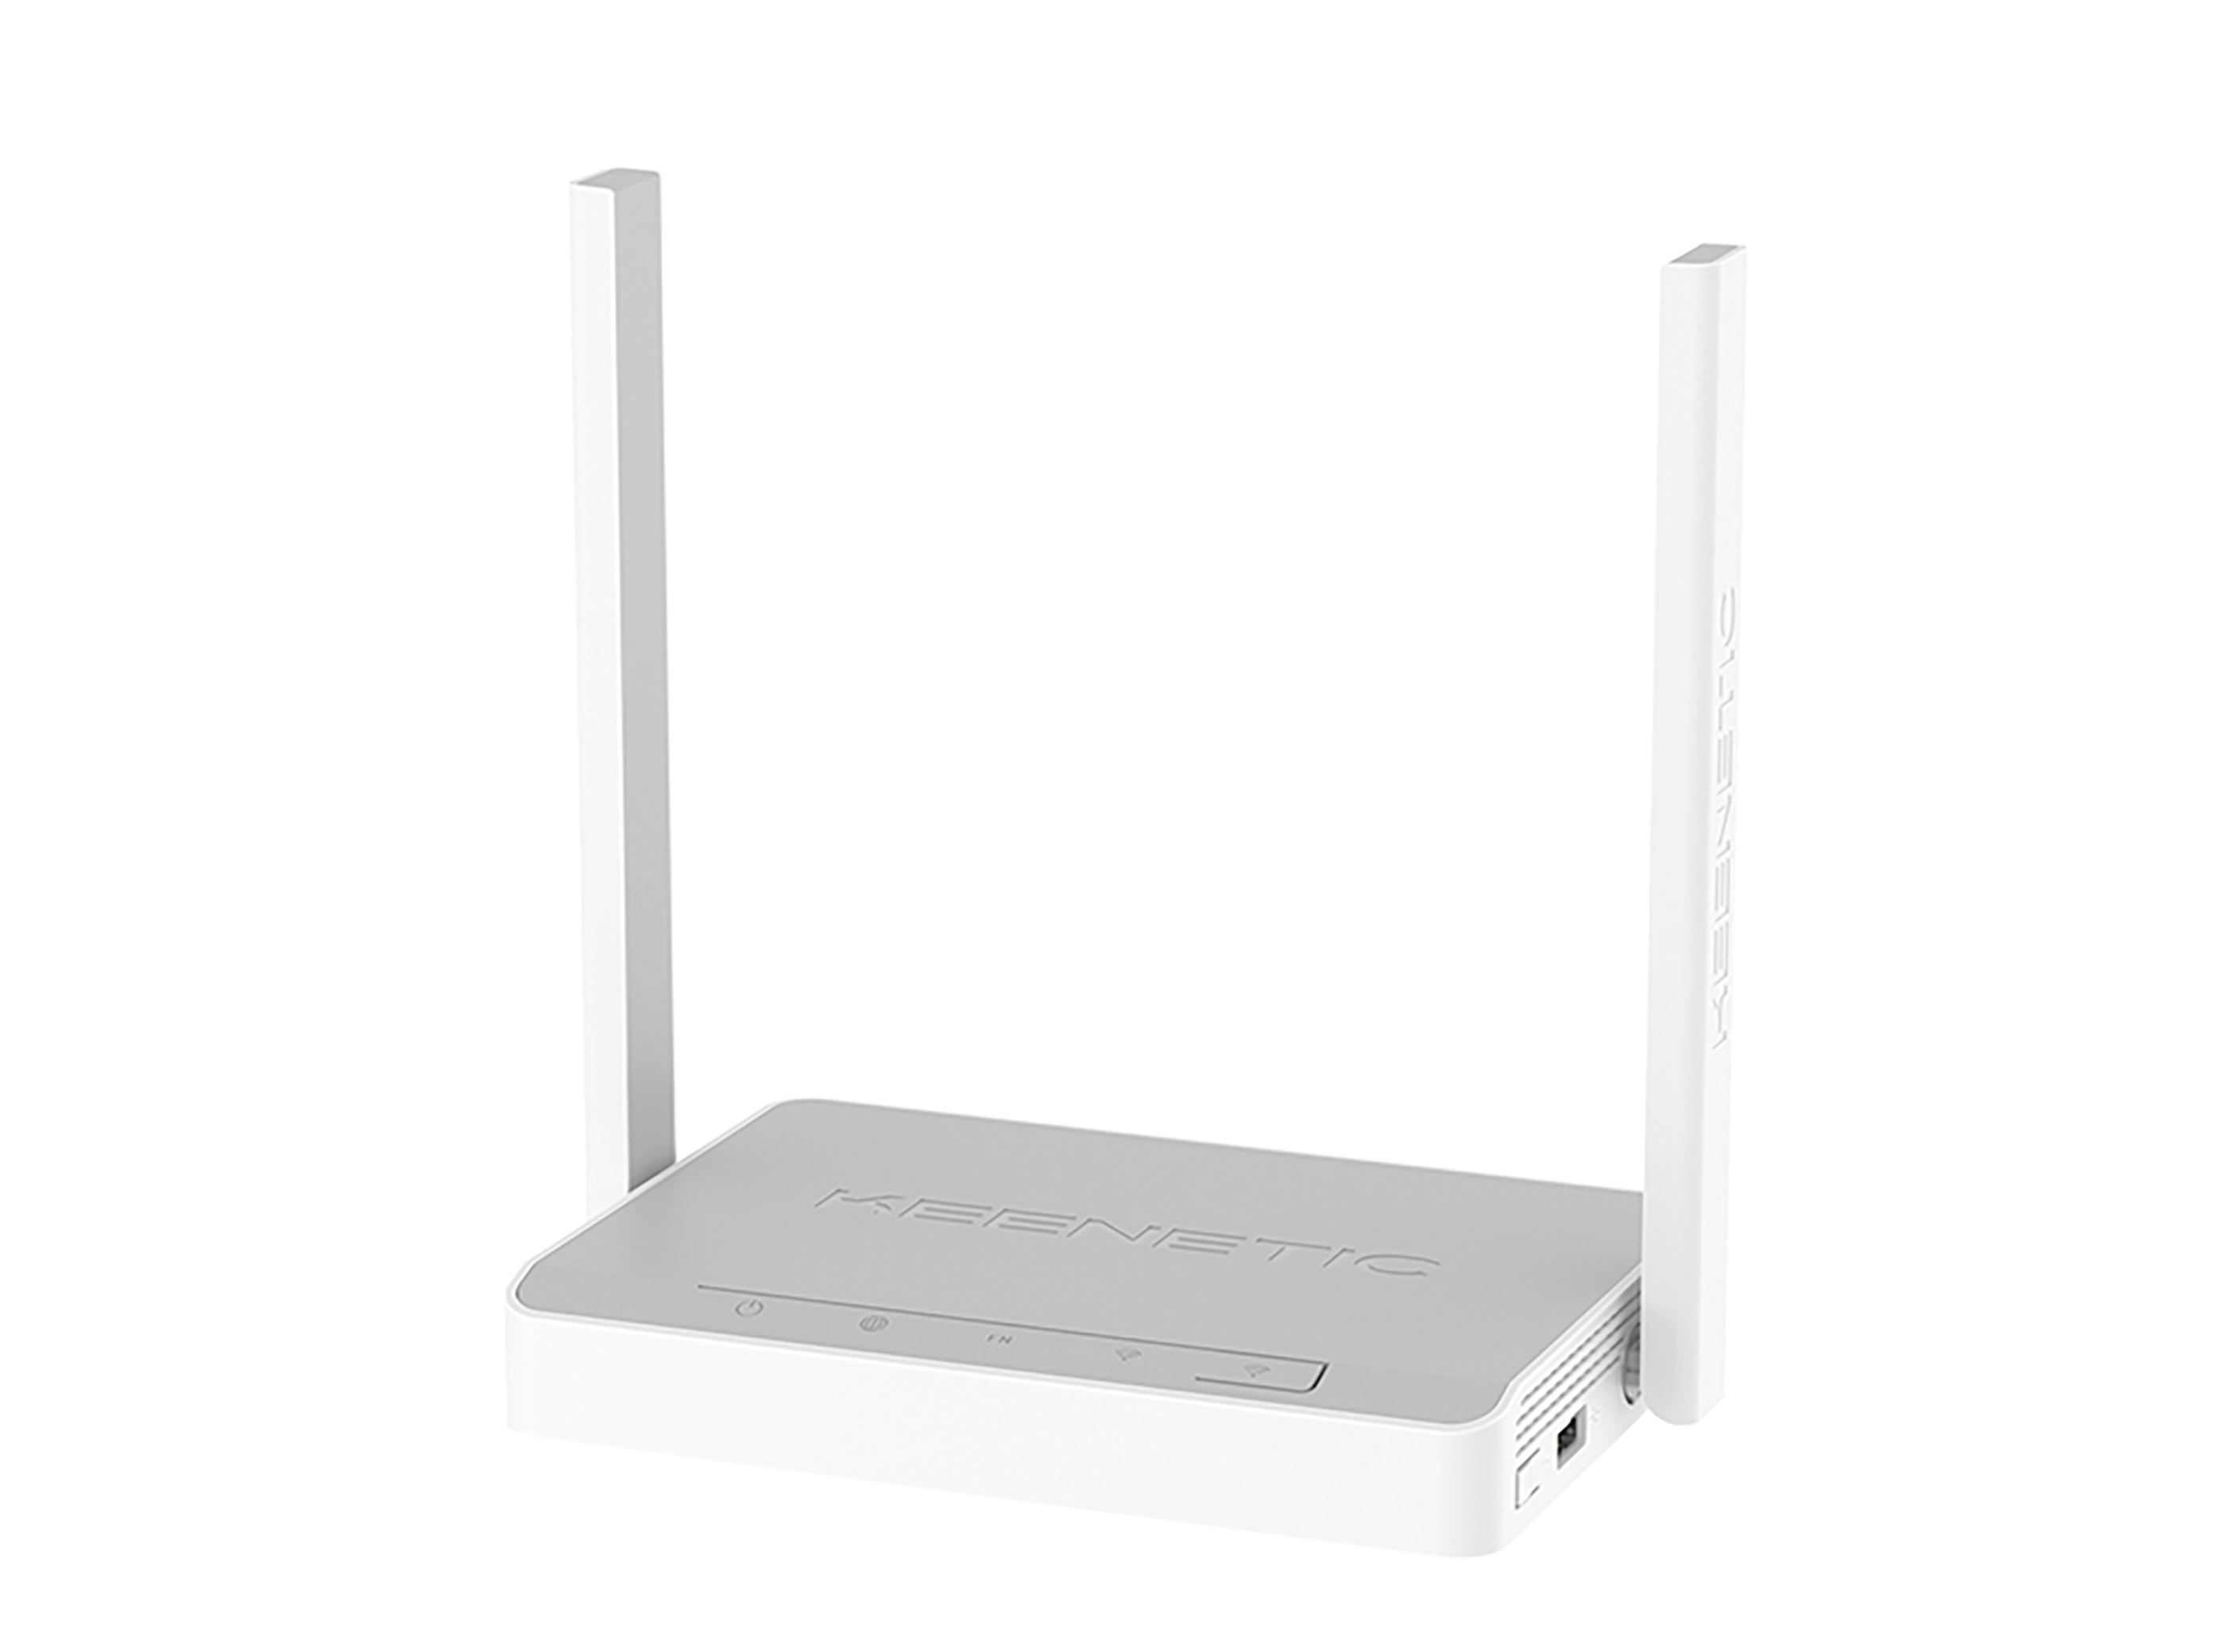 KEENETIC Omni DSL N300 Mesh Wi-Fi 4 Gigabit VDSL/ADSL Modem Router